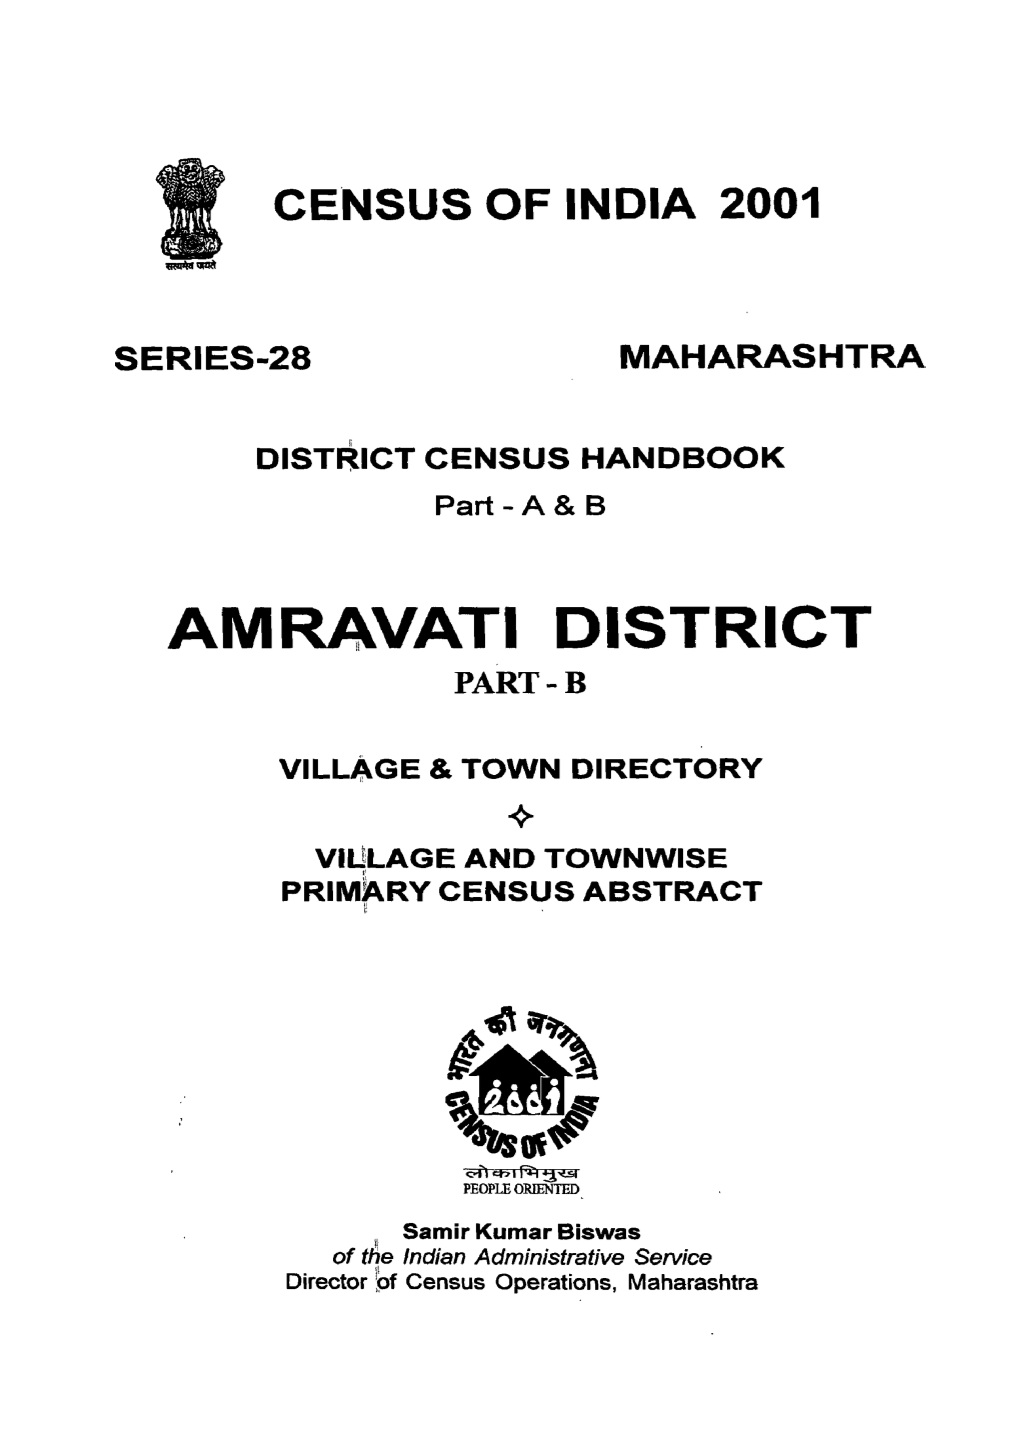 District Census Handbook, Amravati, Part-B, Part XII-A & B, Series-28